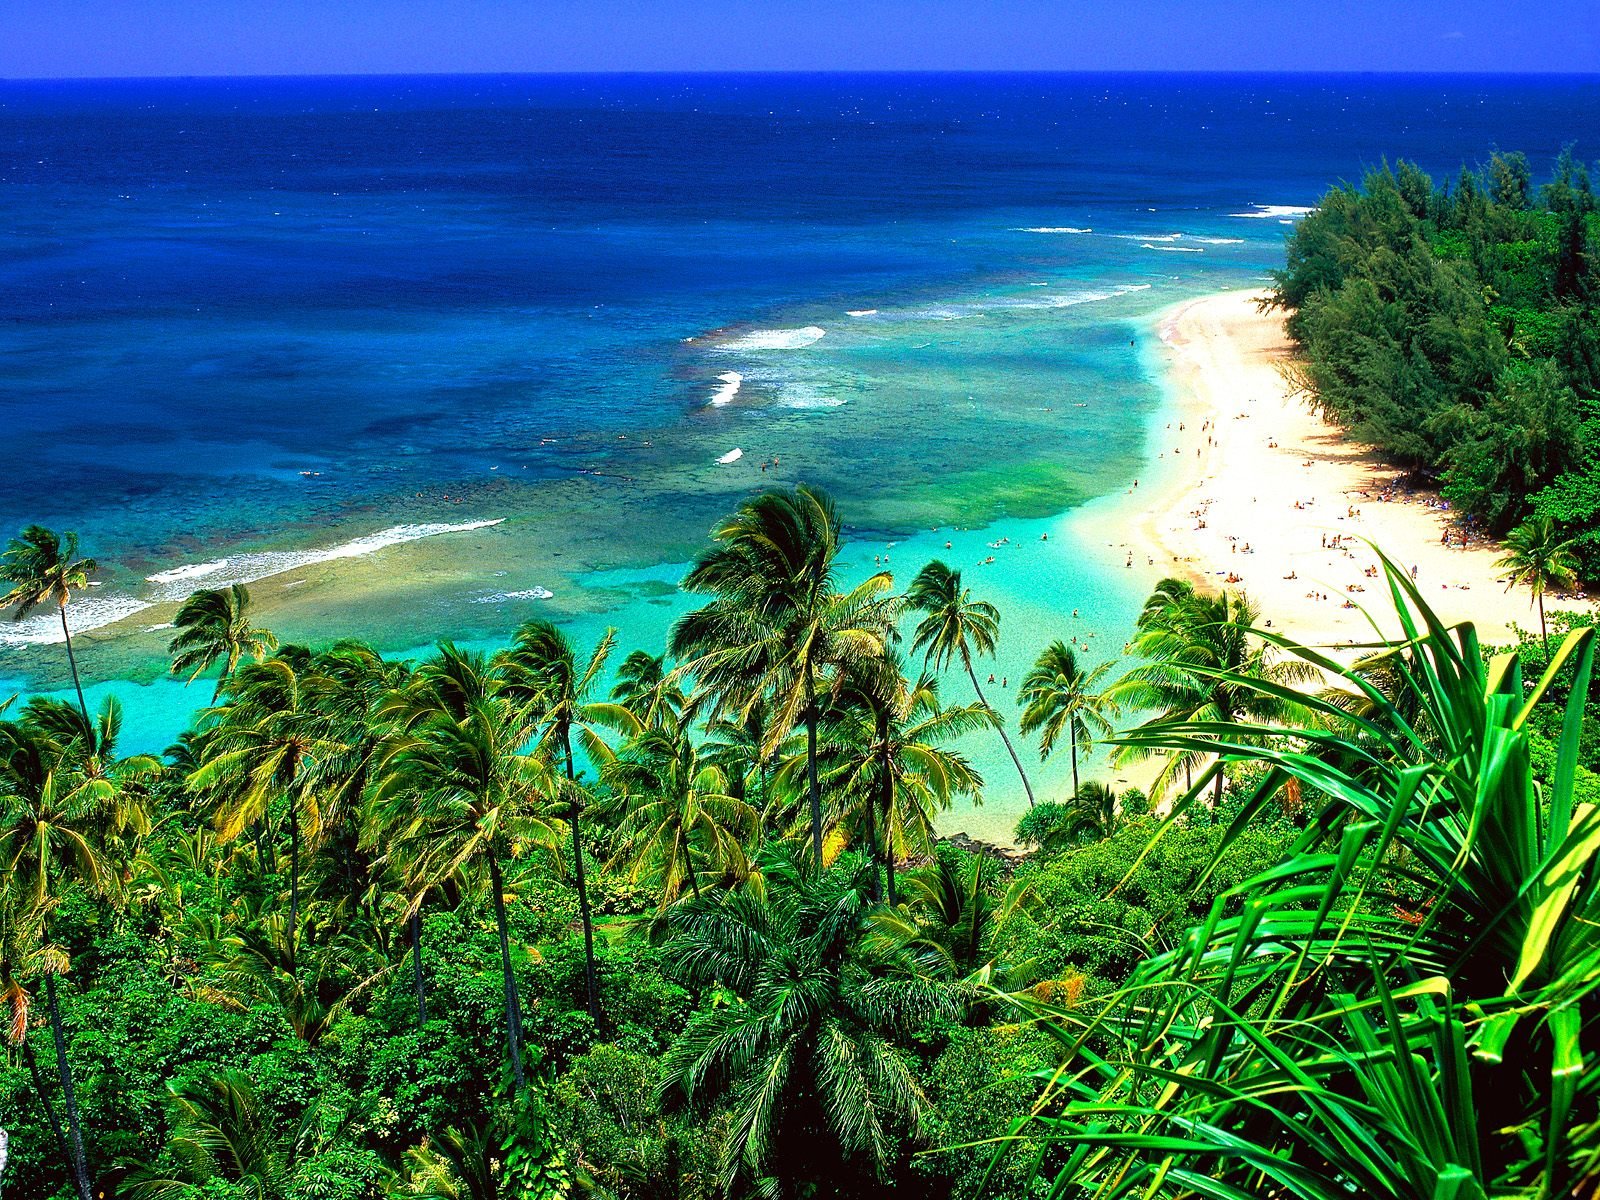 Kauai the Attractive Destination in Hawaii - Gets Ready